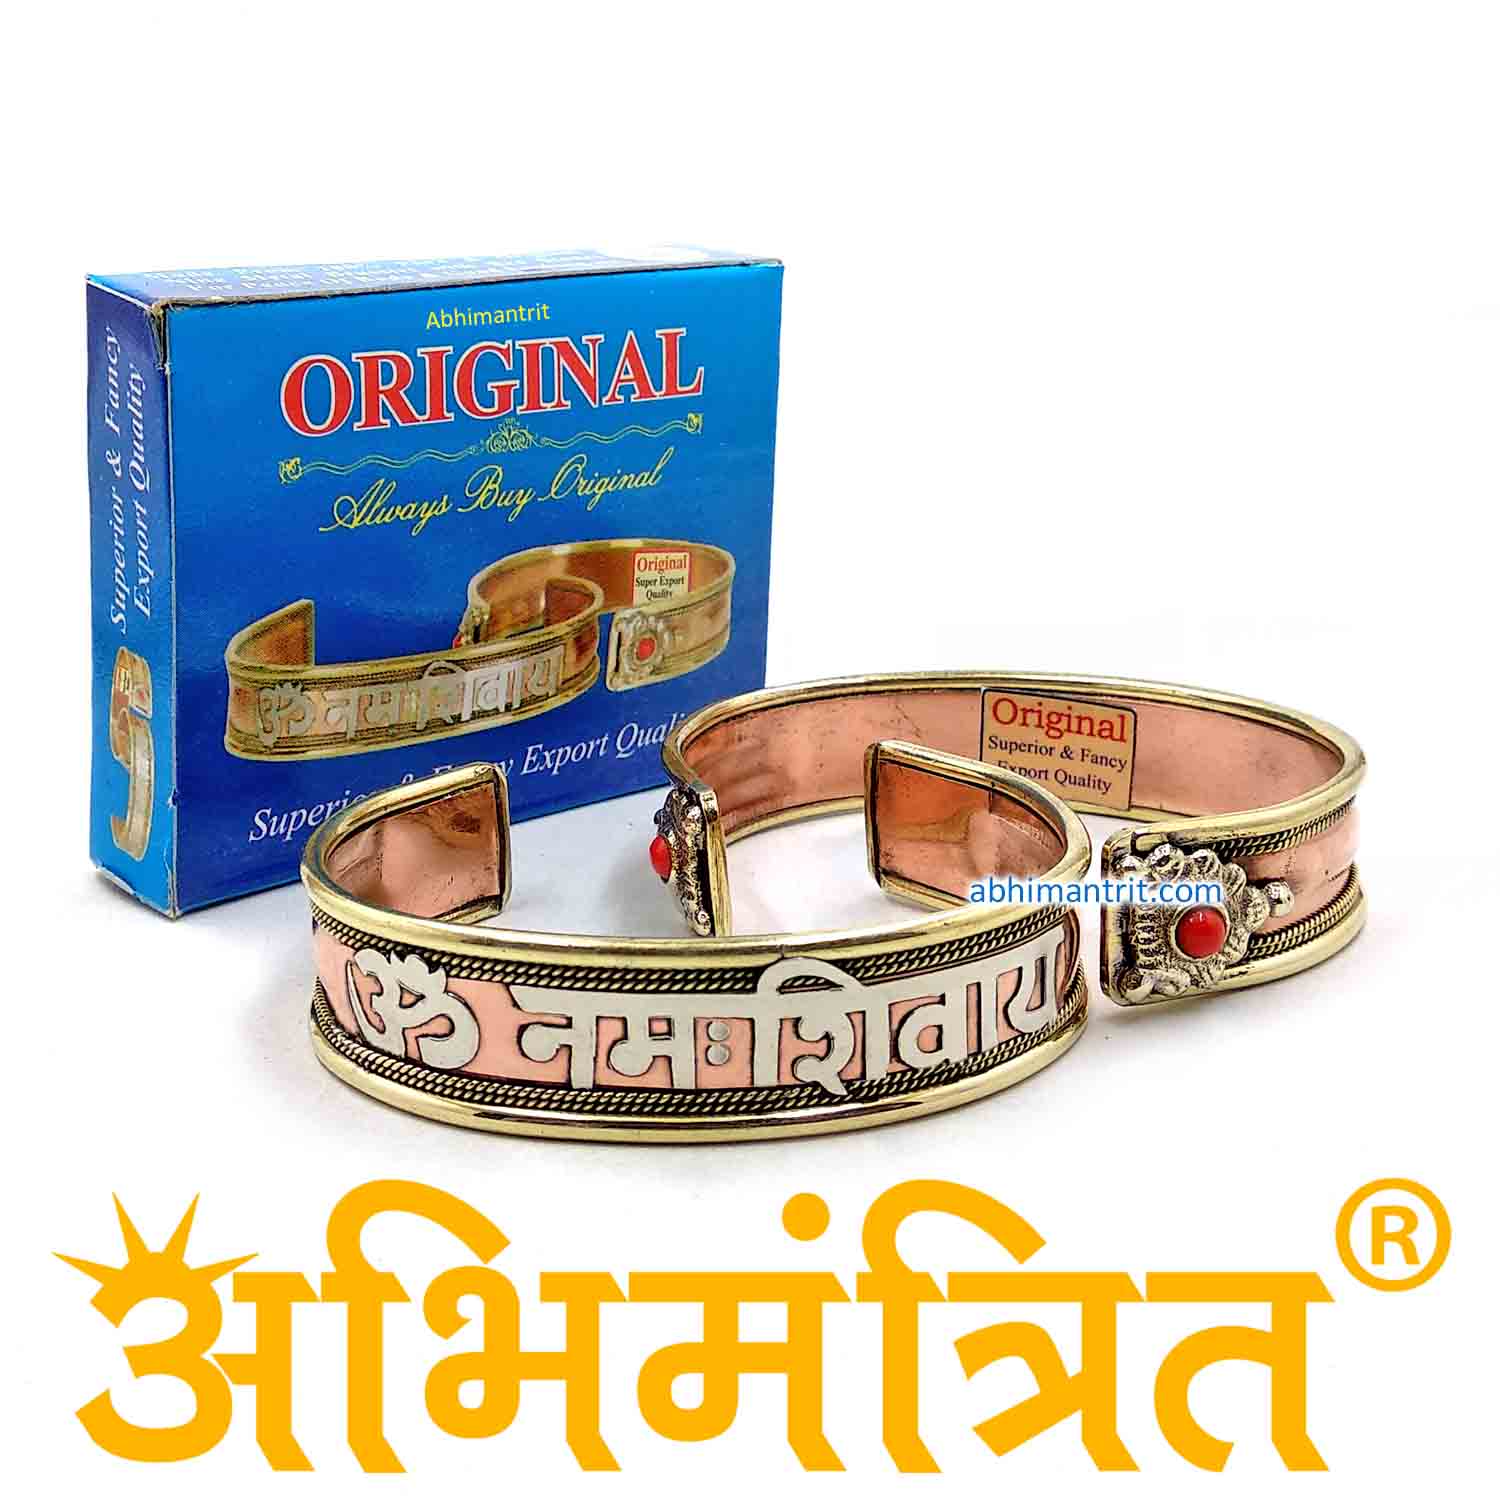 Buy Mantra Om Namah Shivaya Bracelet Ethnic Handmade Old Silver Bangle Cuff  Online in India - Etsy